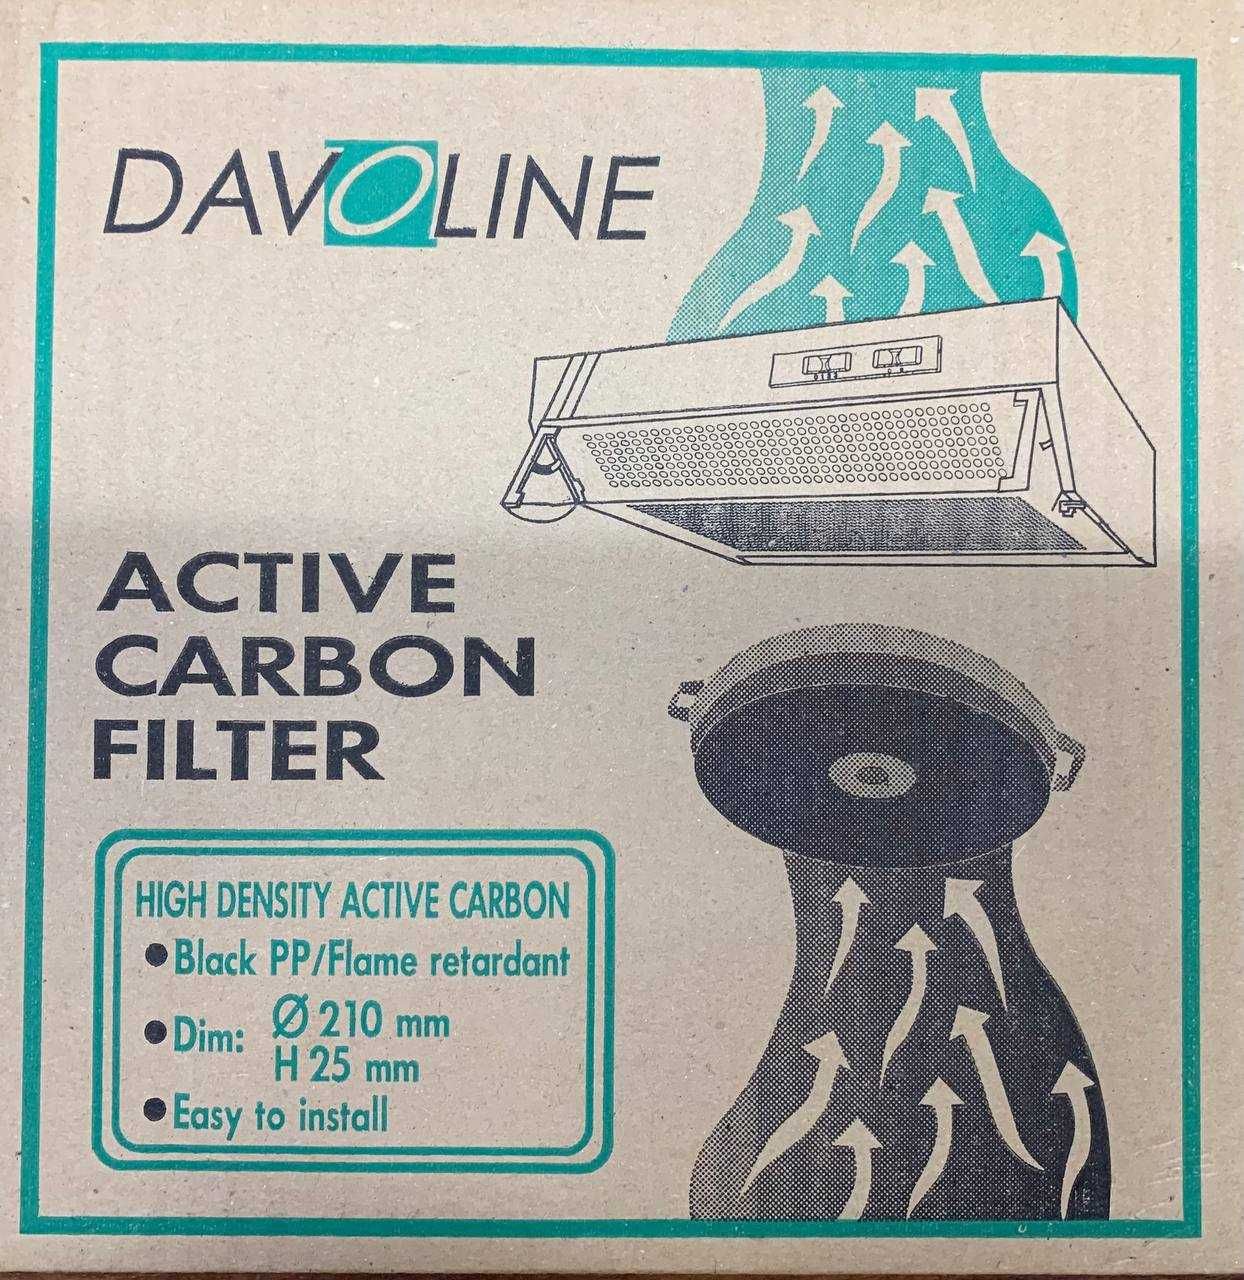 Фільтри з активованим вугіллям
Davoline D210 activated carbon filters